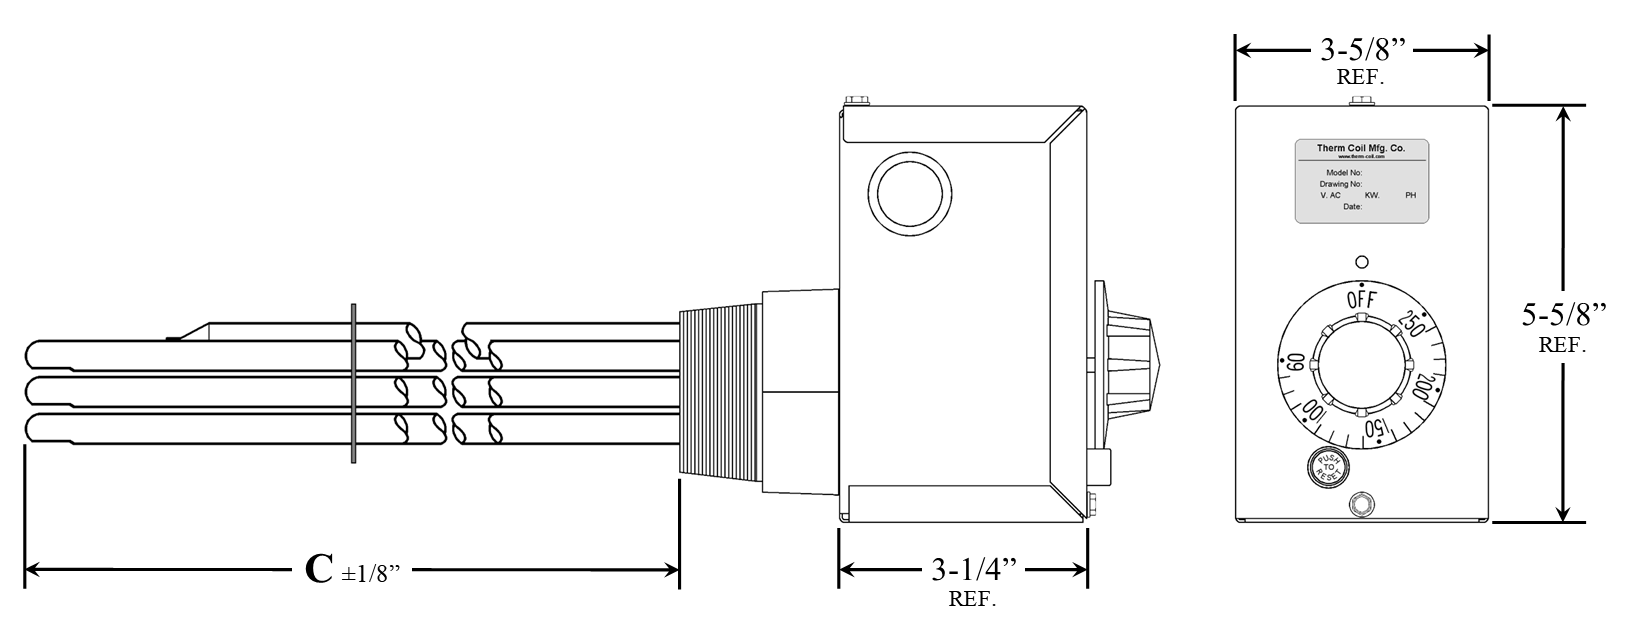 HA-5041 Model: 5000W @ 240V 1-Phase, 13" Immersion Length Regulated 2" NPT Commercial Dishwasher Heating Elements